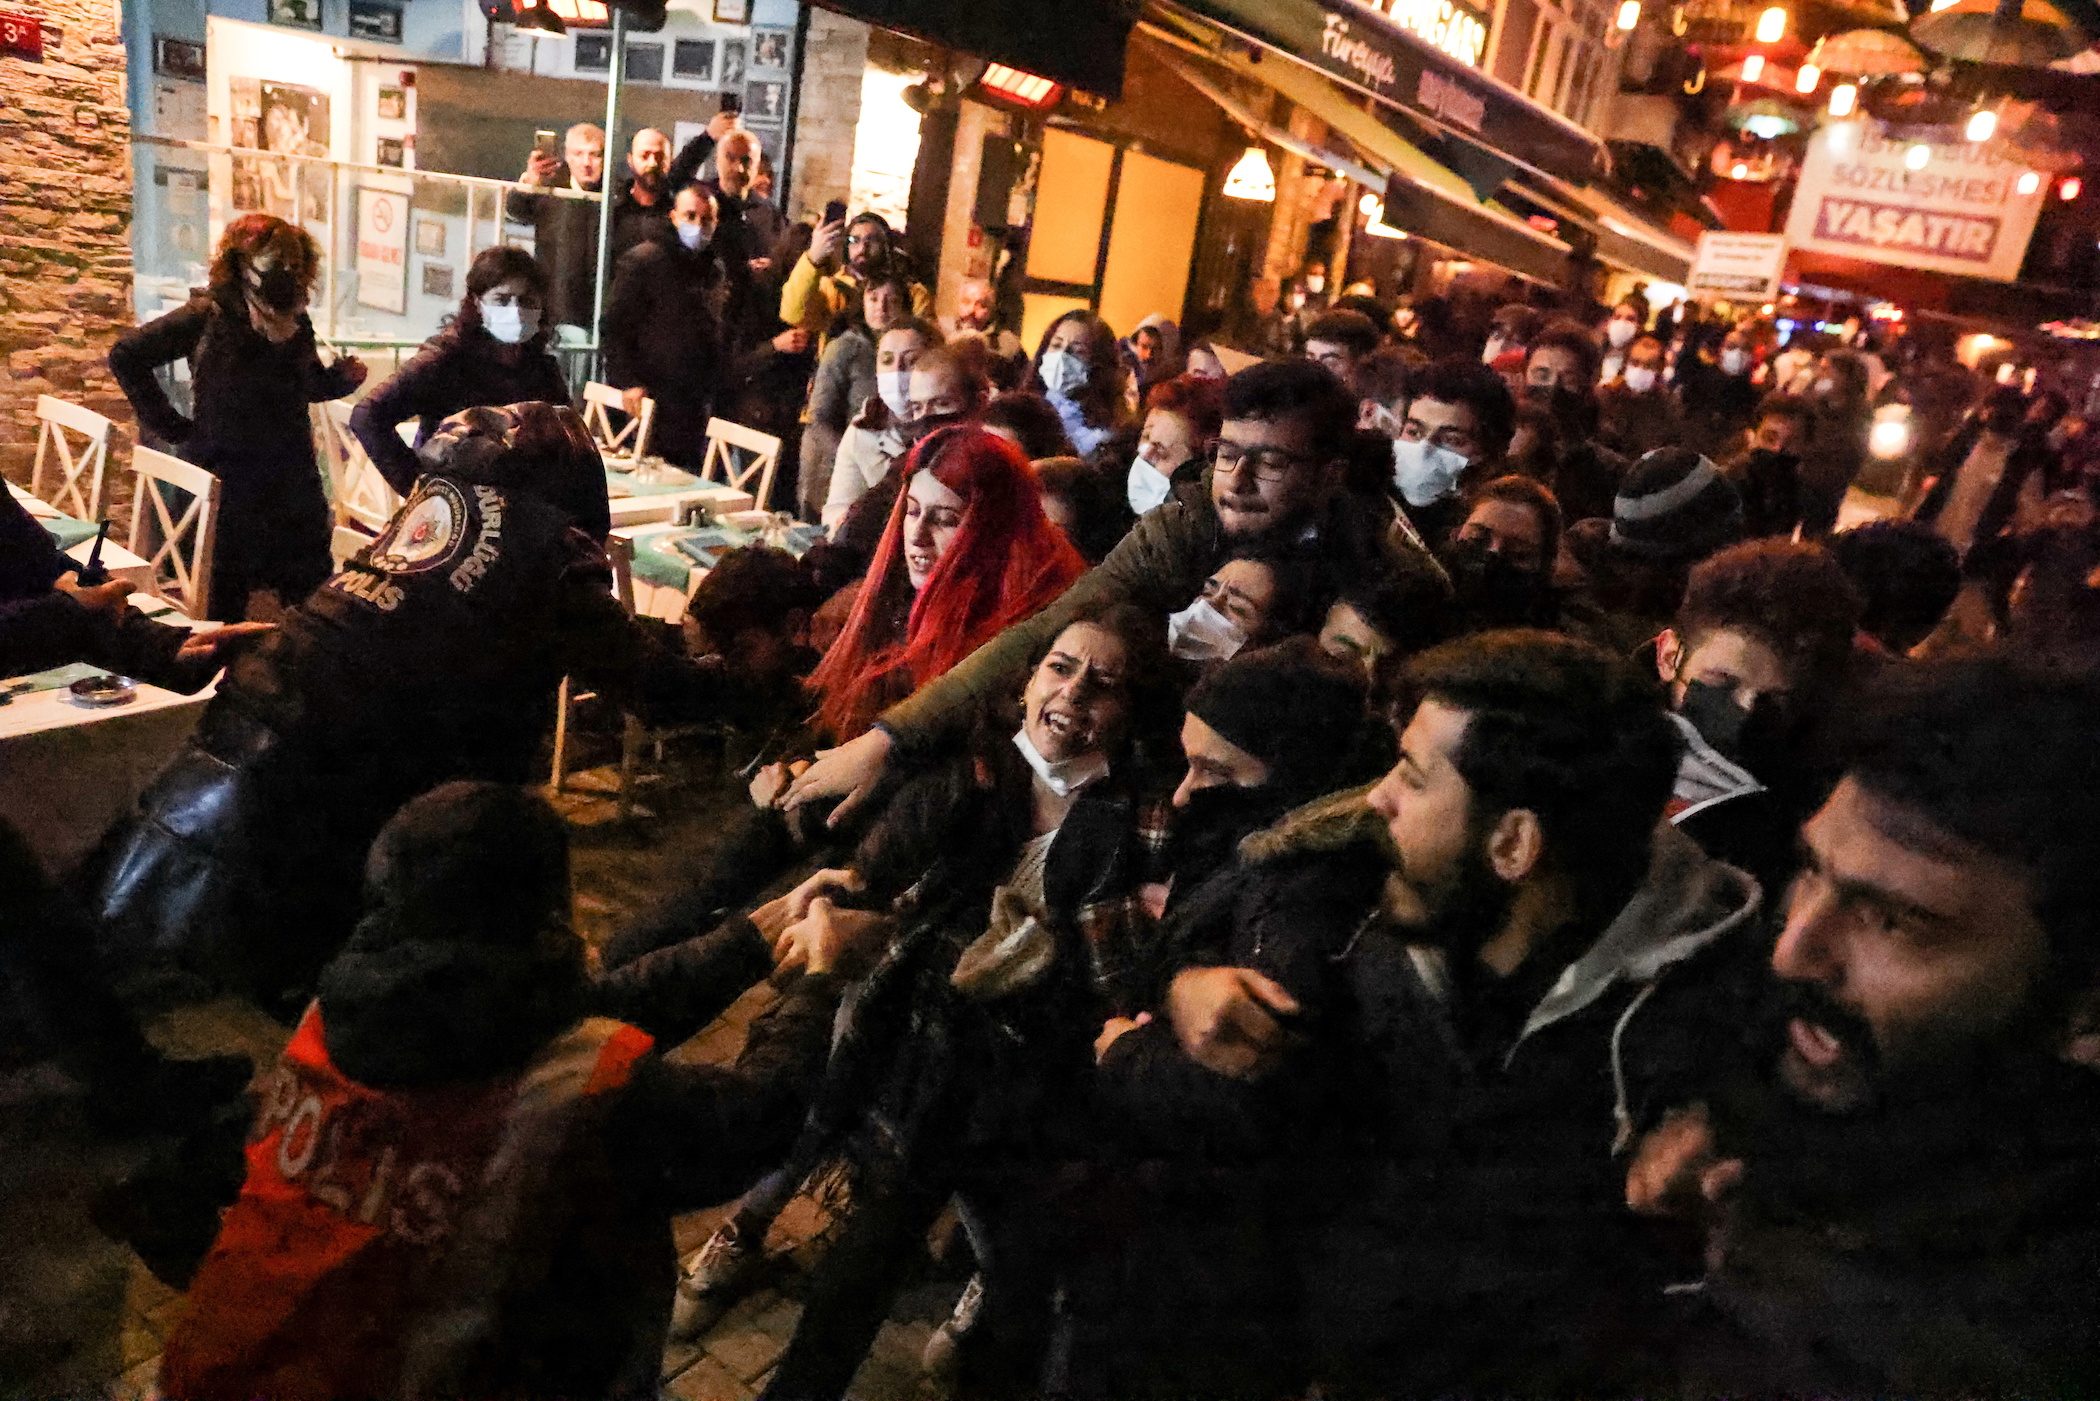 Angry Turks queue for fuel ahead of steep price hikes amid lira crash